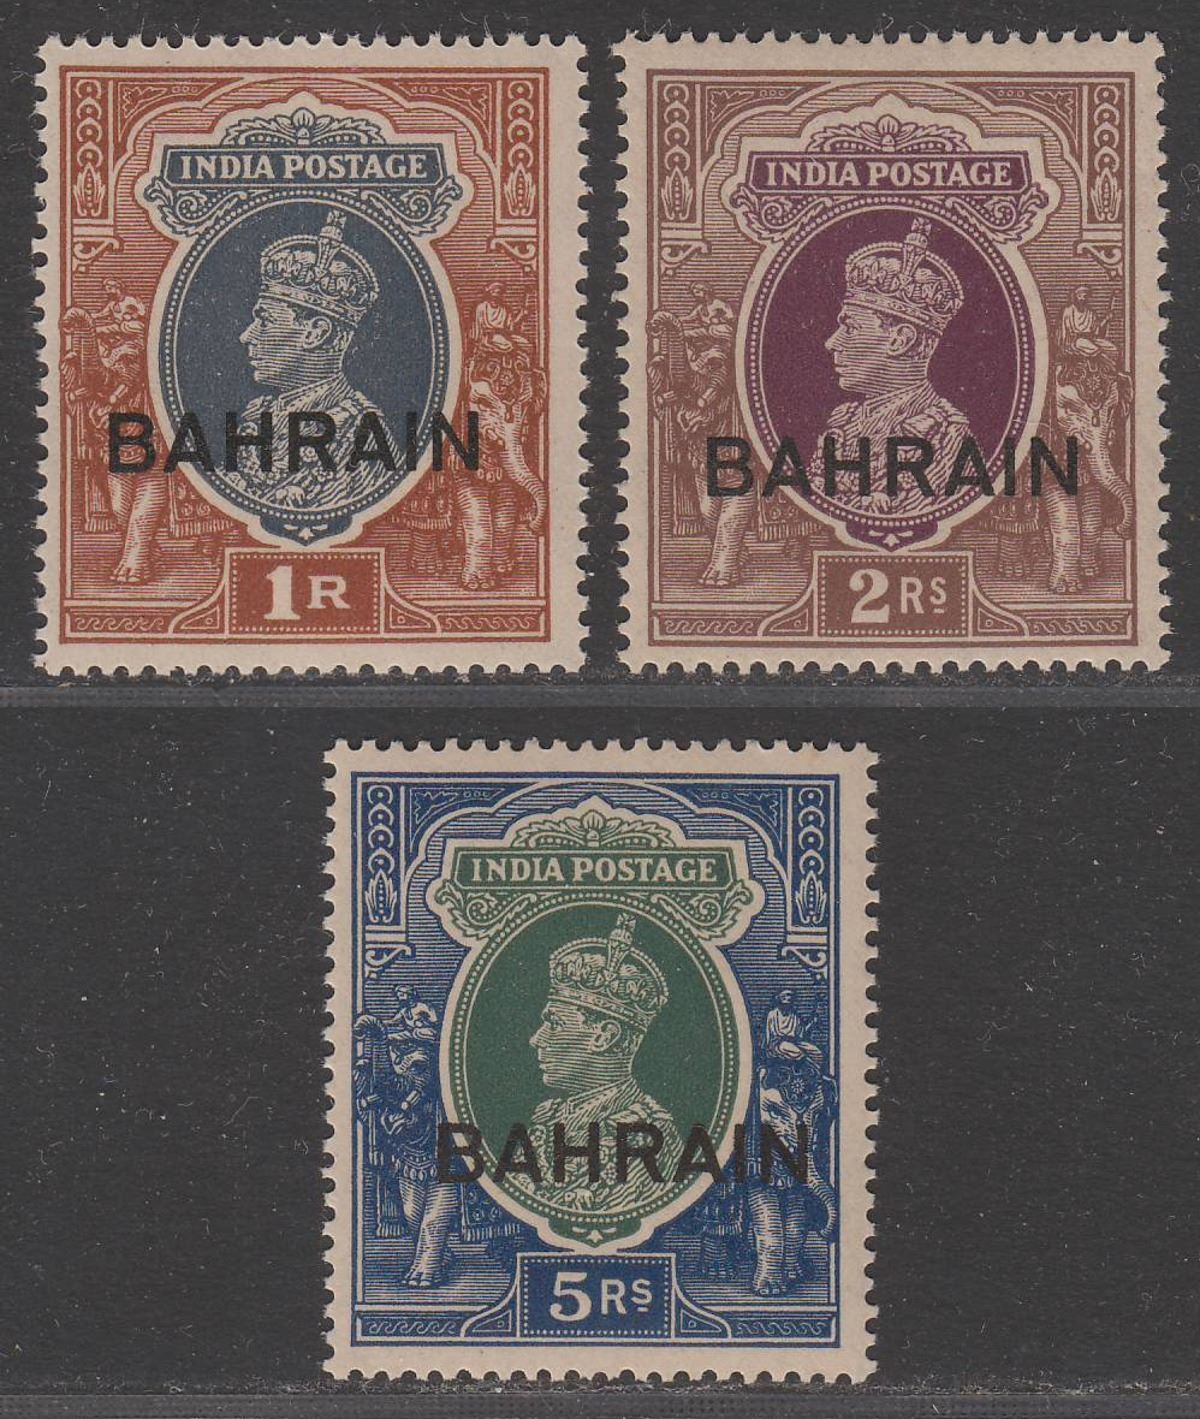 Bahrain 1940 King George VI 1r, 2r, 5r Overprint UM Mint SG32-34 cat £48